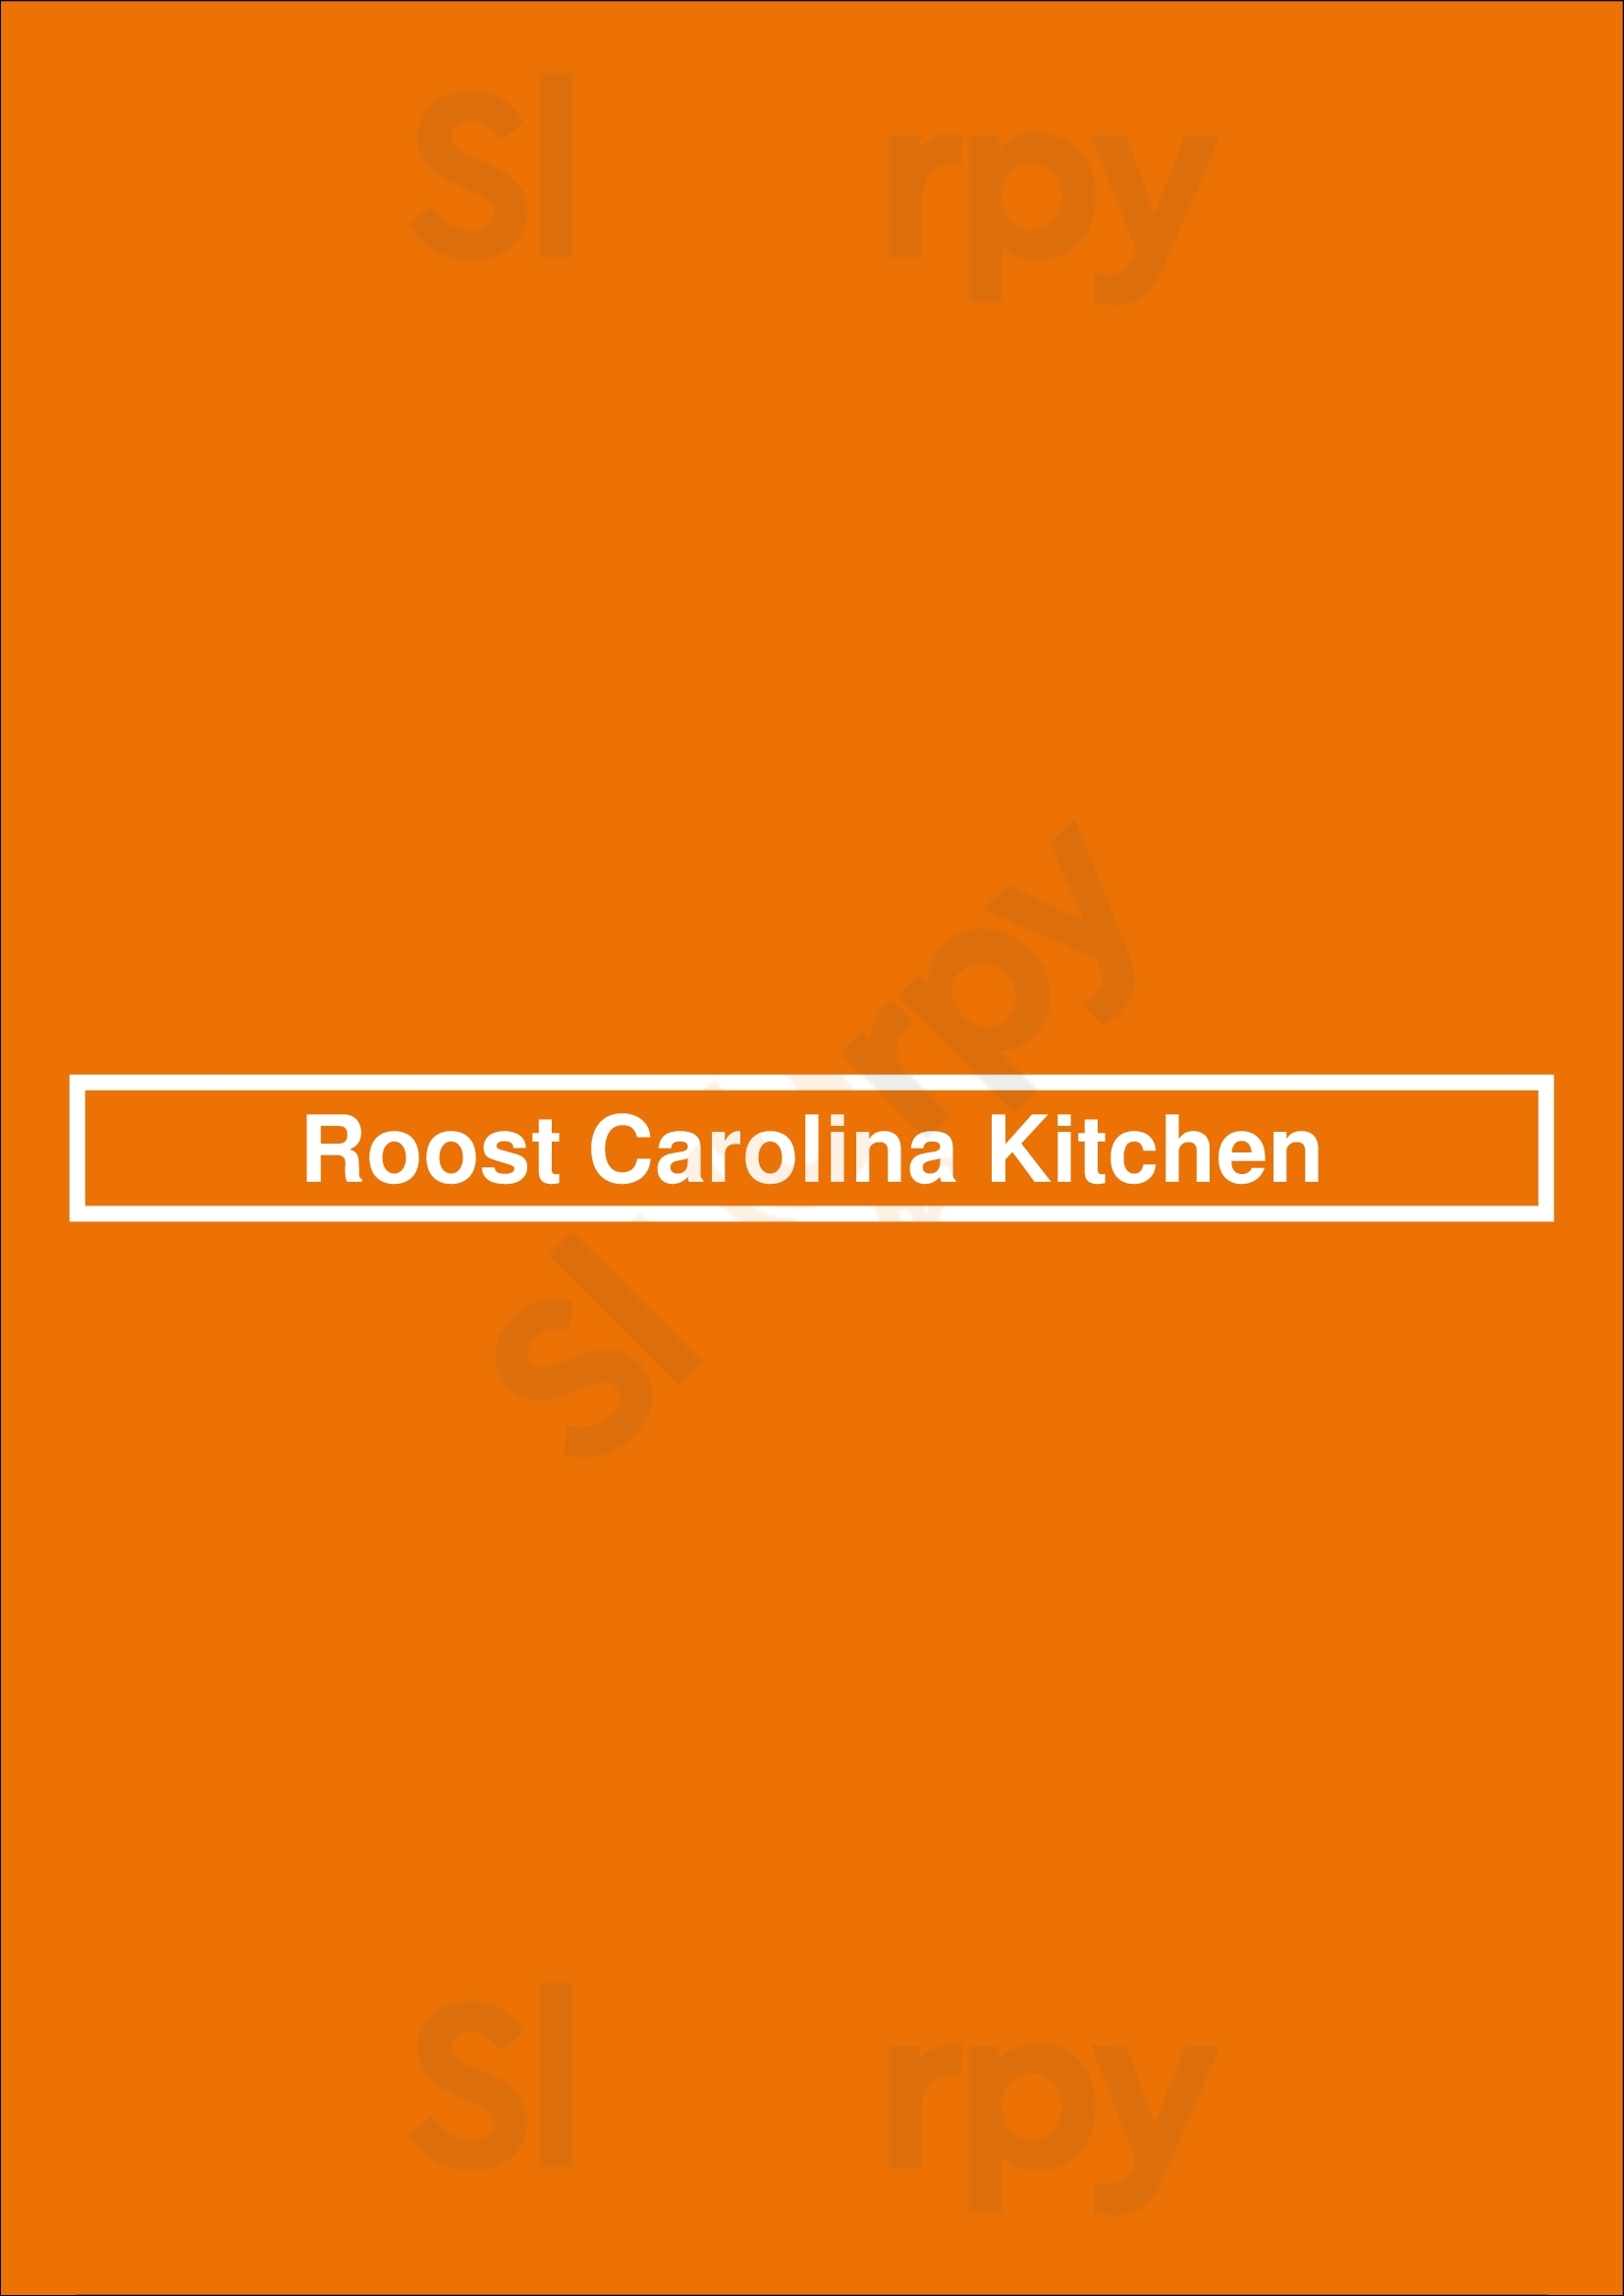 Roost Carolina Kitchen Chicago Menu - 1